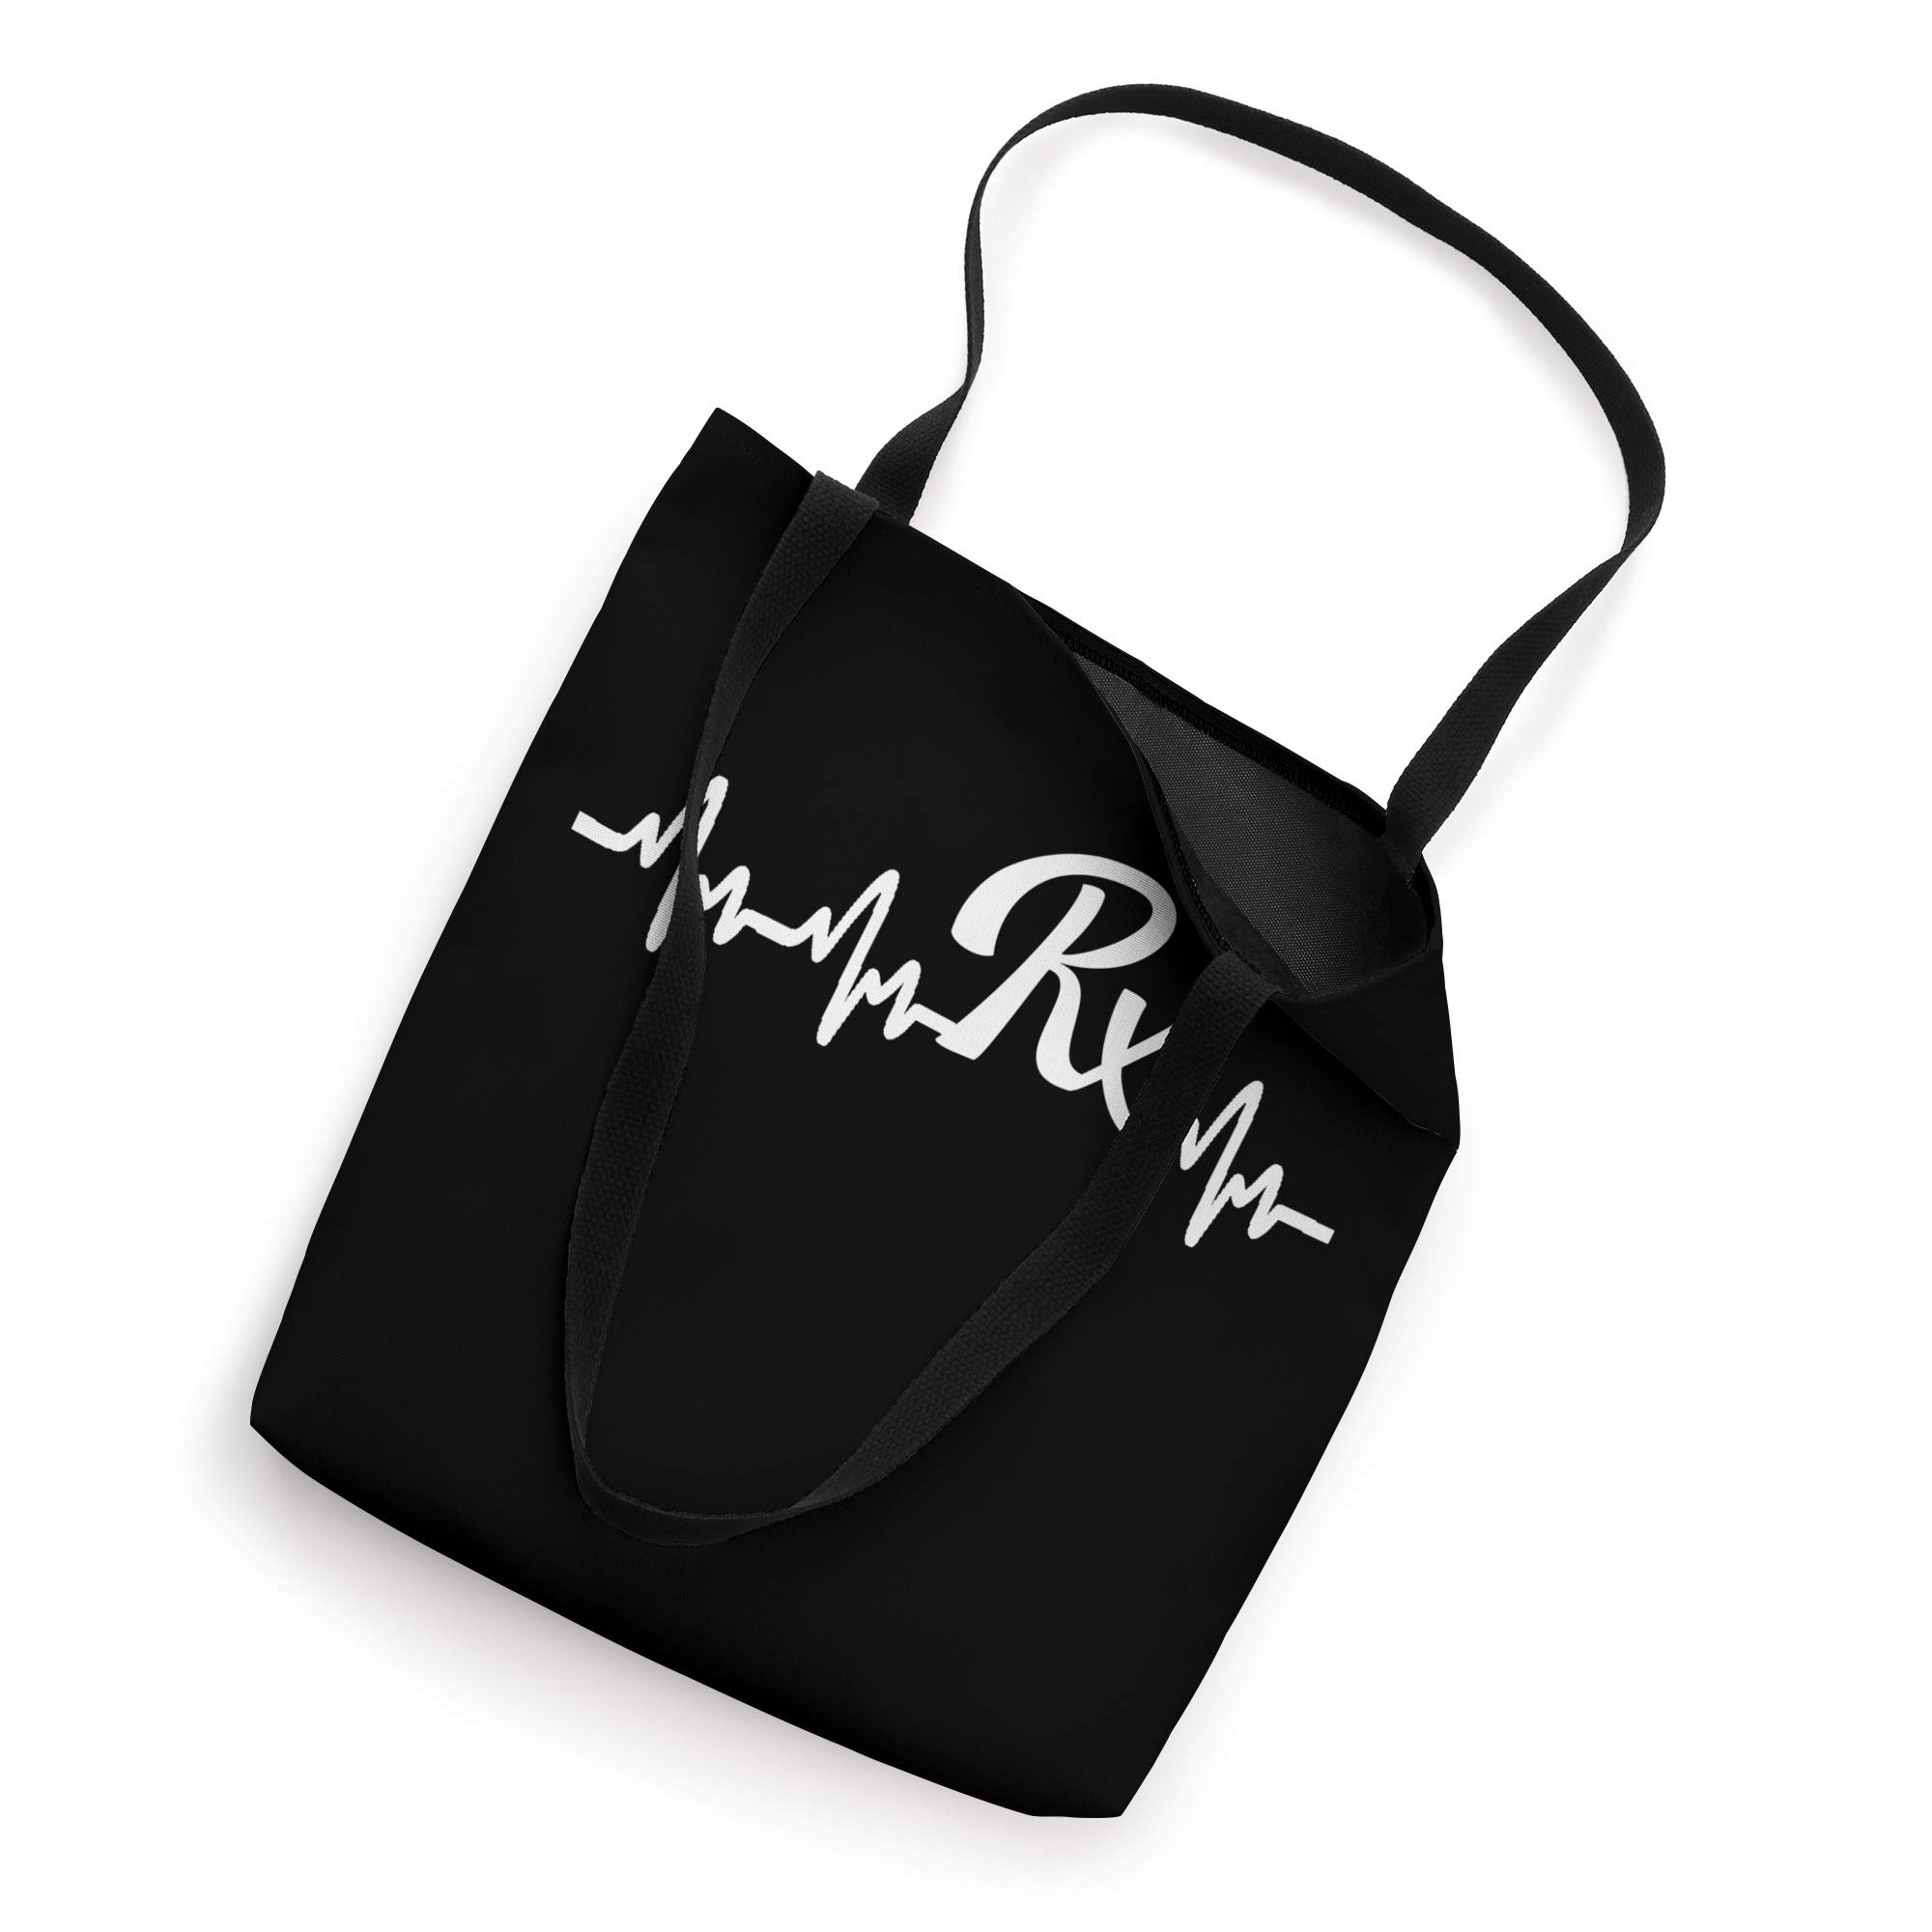 Rx Pharmacist Pharmacy Prescription Symbol EKG ECG Heartbeat Tote Bag